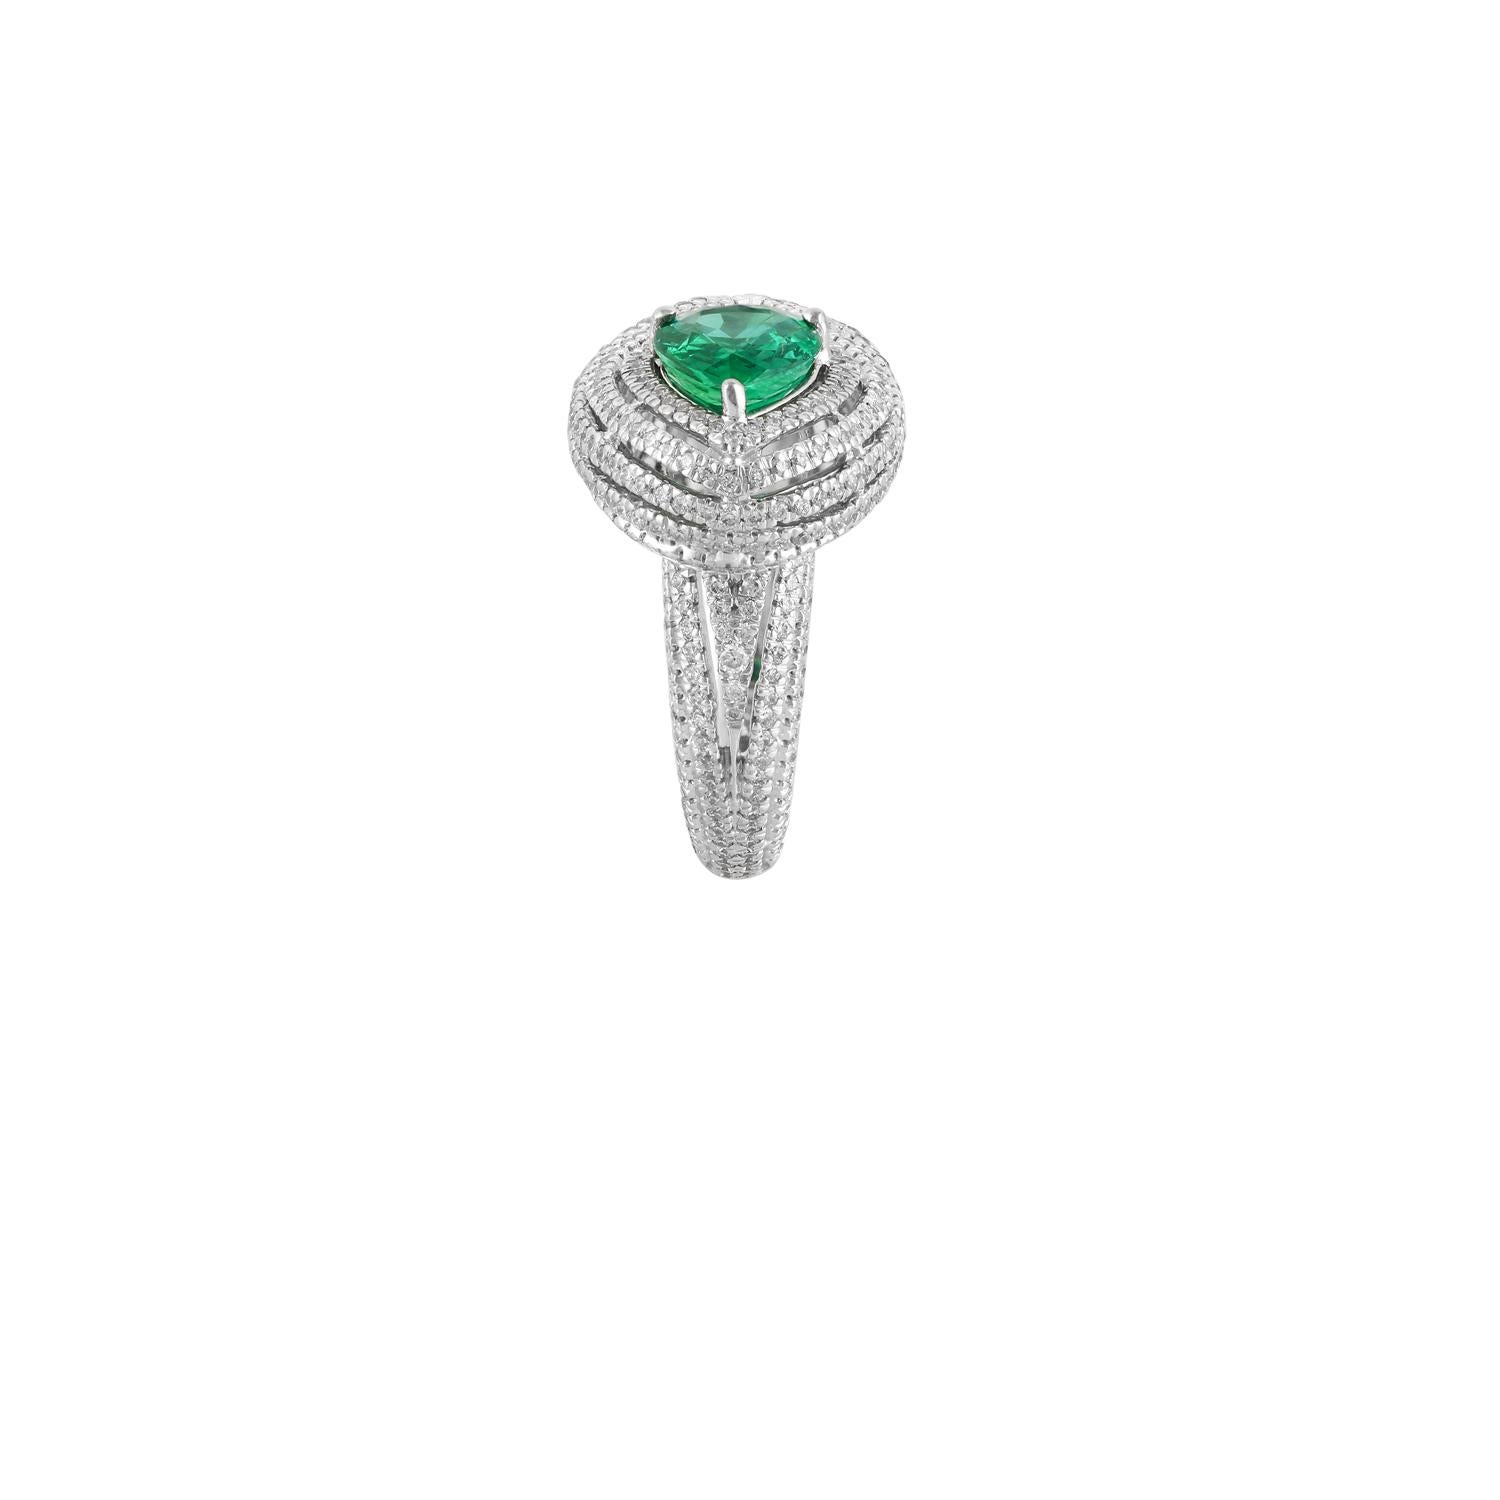 Pear Cut Emerald Diamond Ring in 18 Karat White Gold